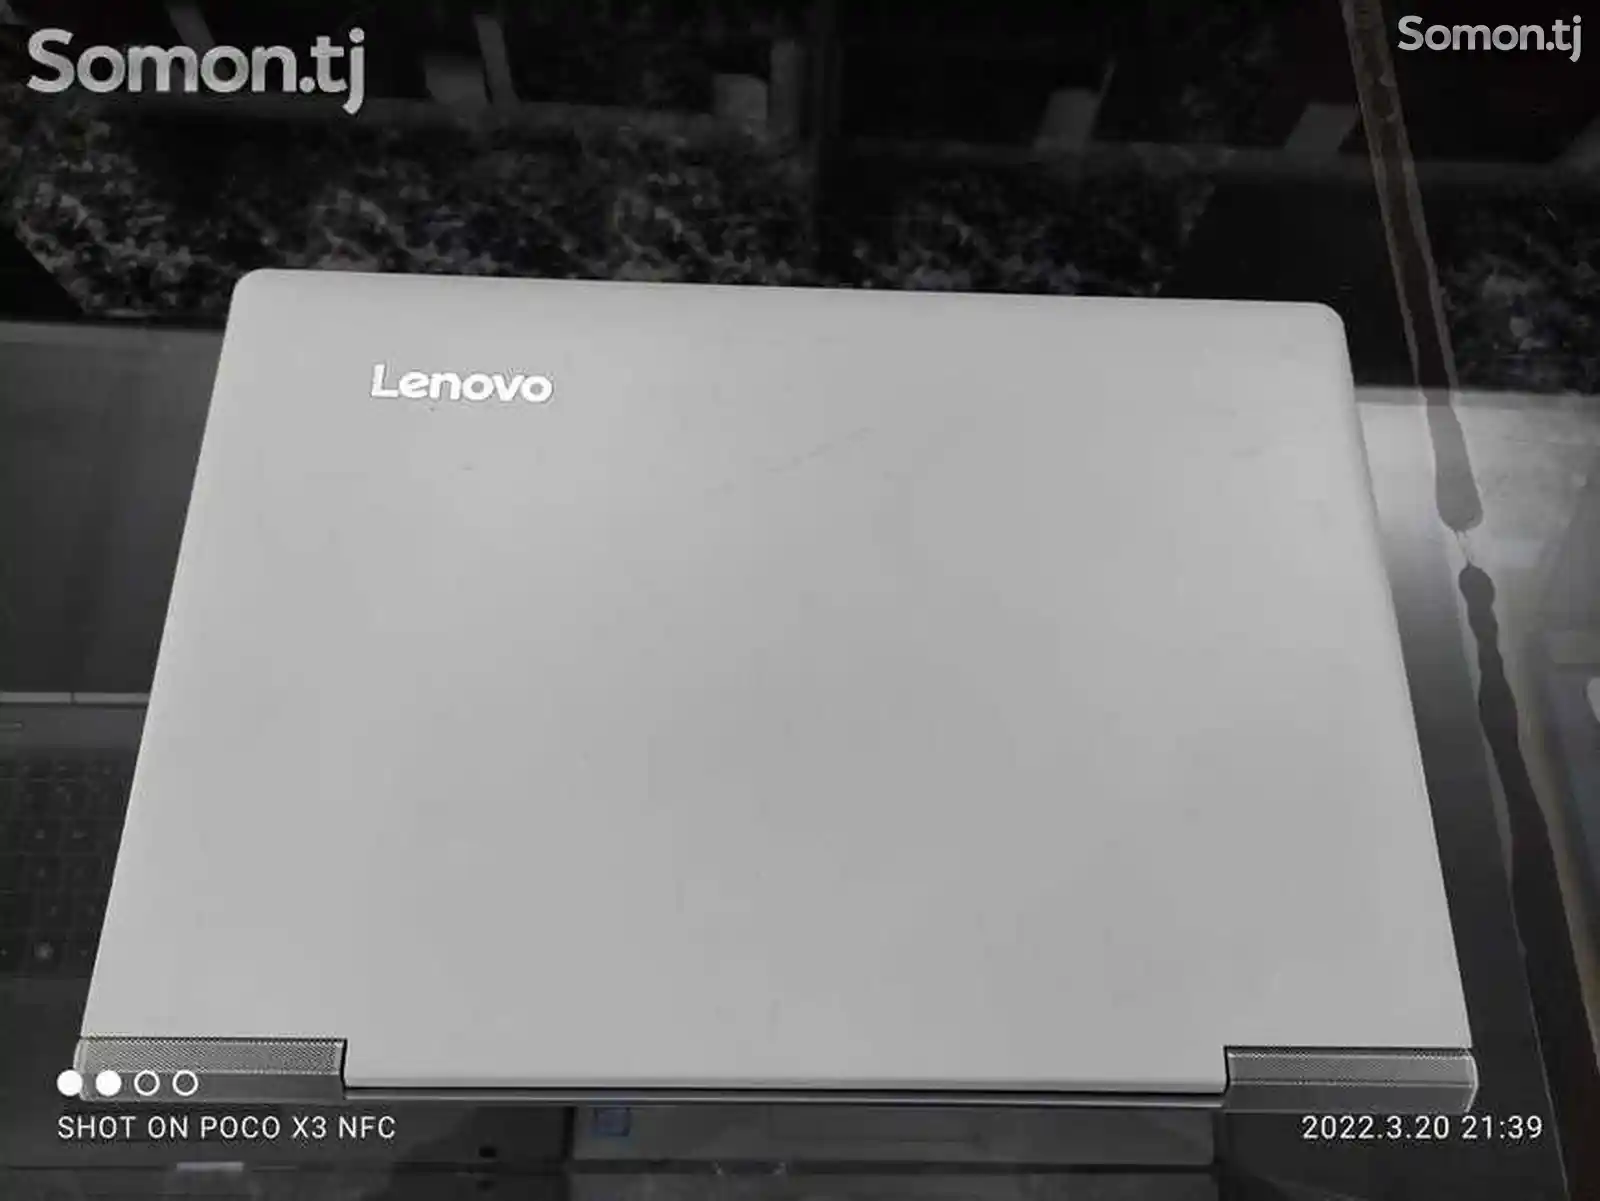 Игровой Ноутбук Lenovo Ideapad 700 Core i7-6700HQ GTX 950M 2Gb-7